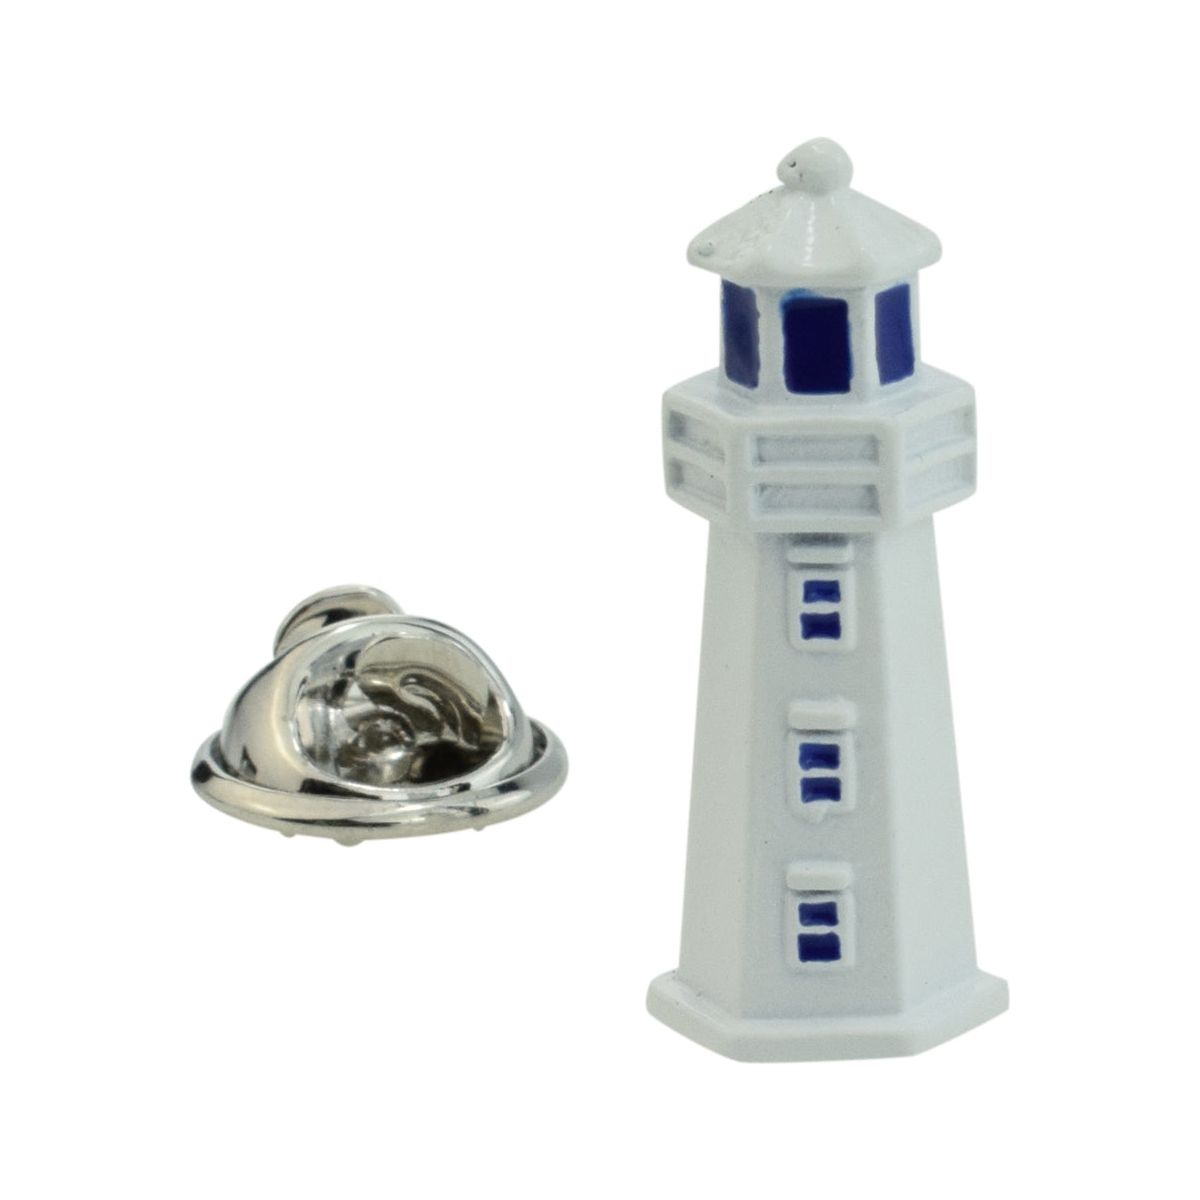 Lighthouse Lapel Pin Badge - Ashton and Finch